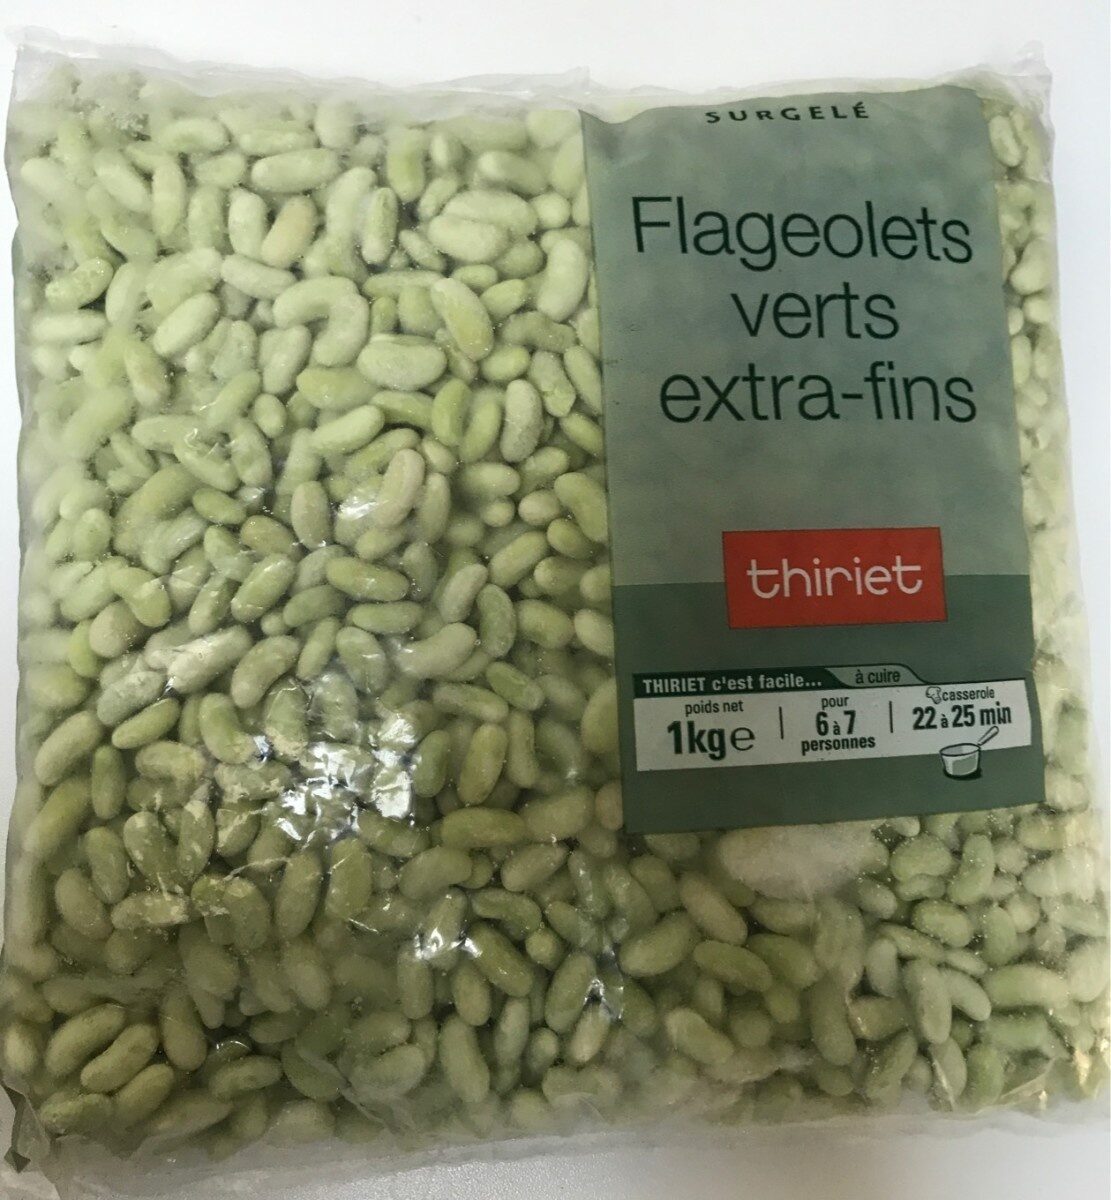 Flageolets verts extra-fins - Produit